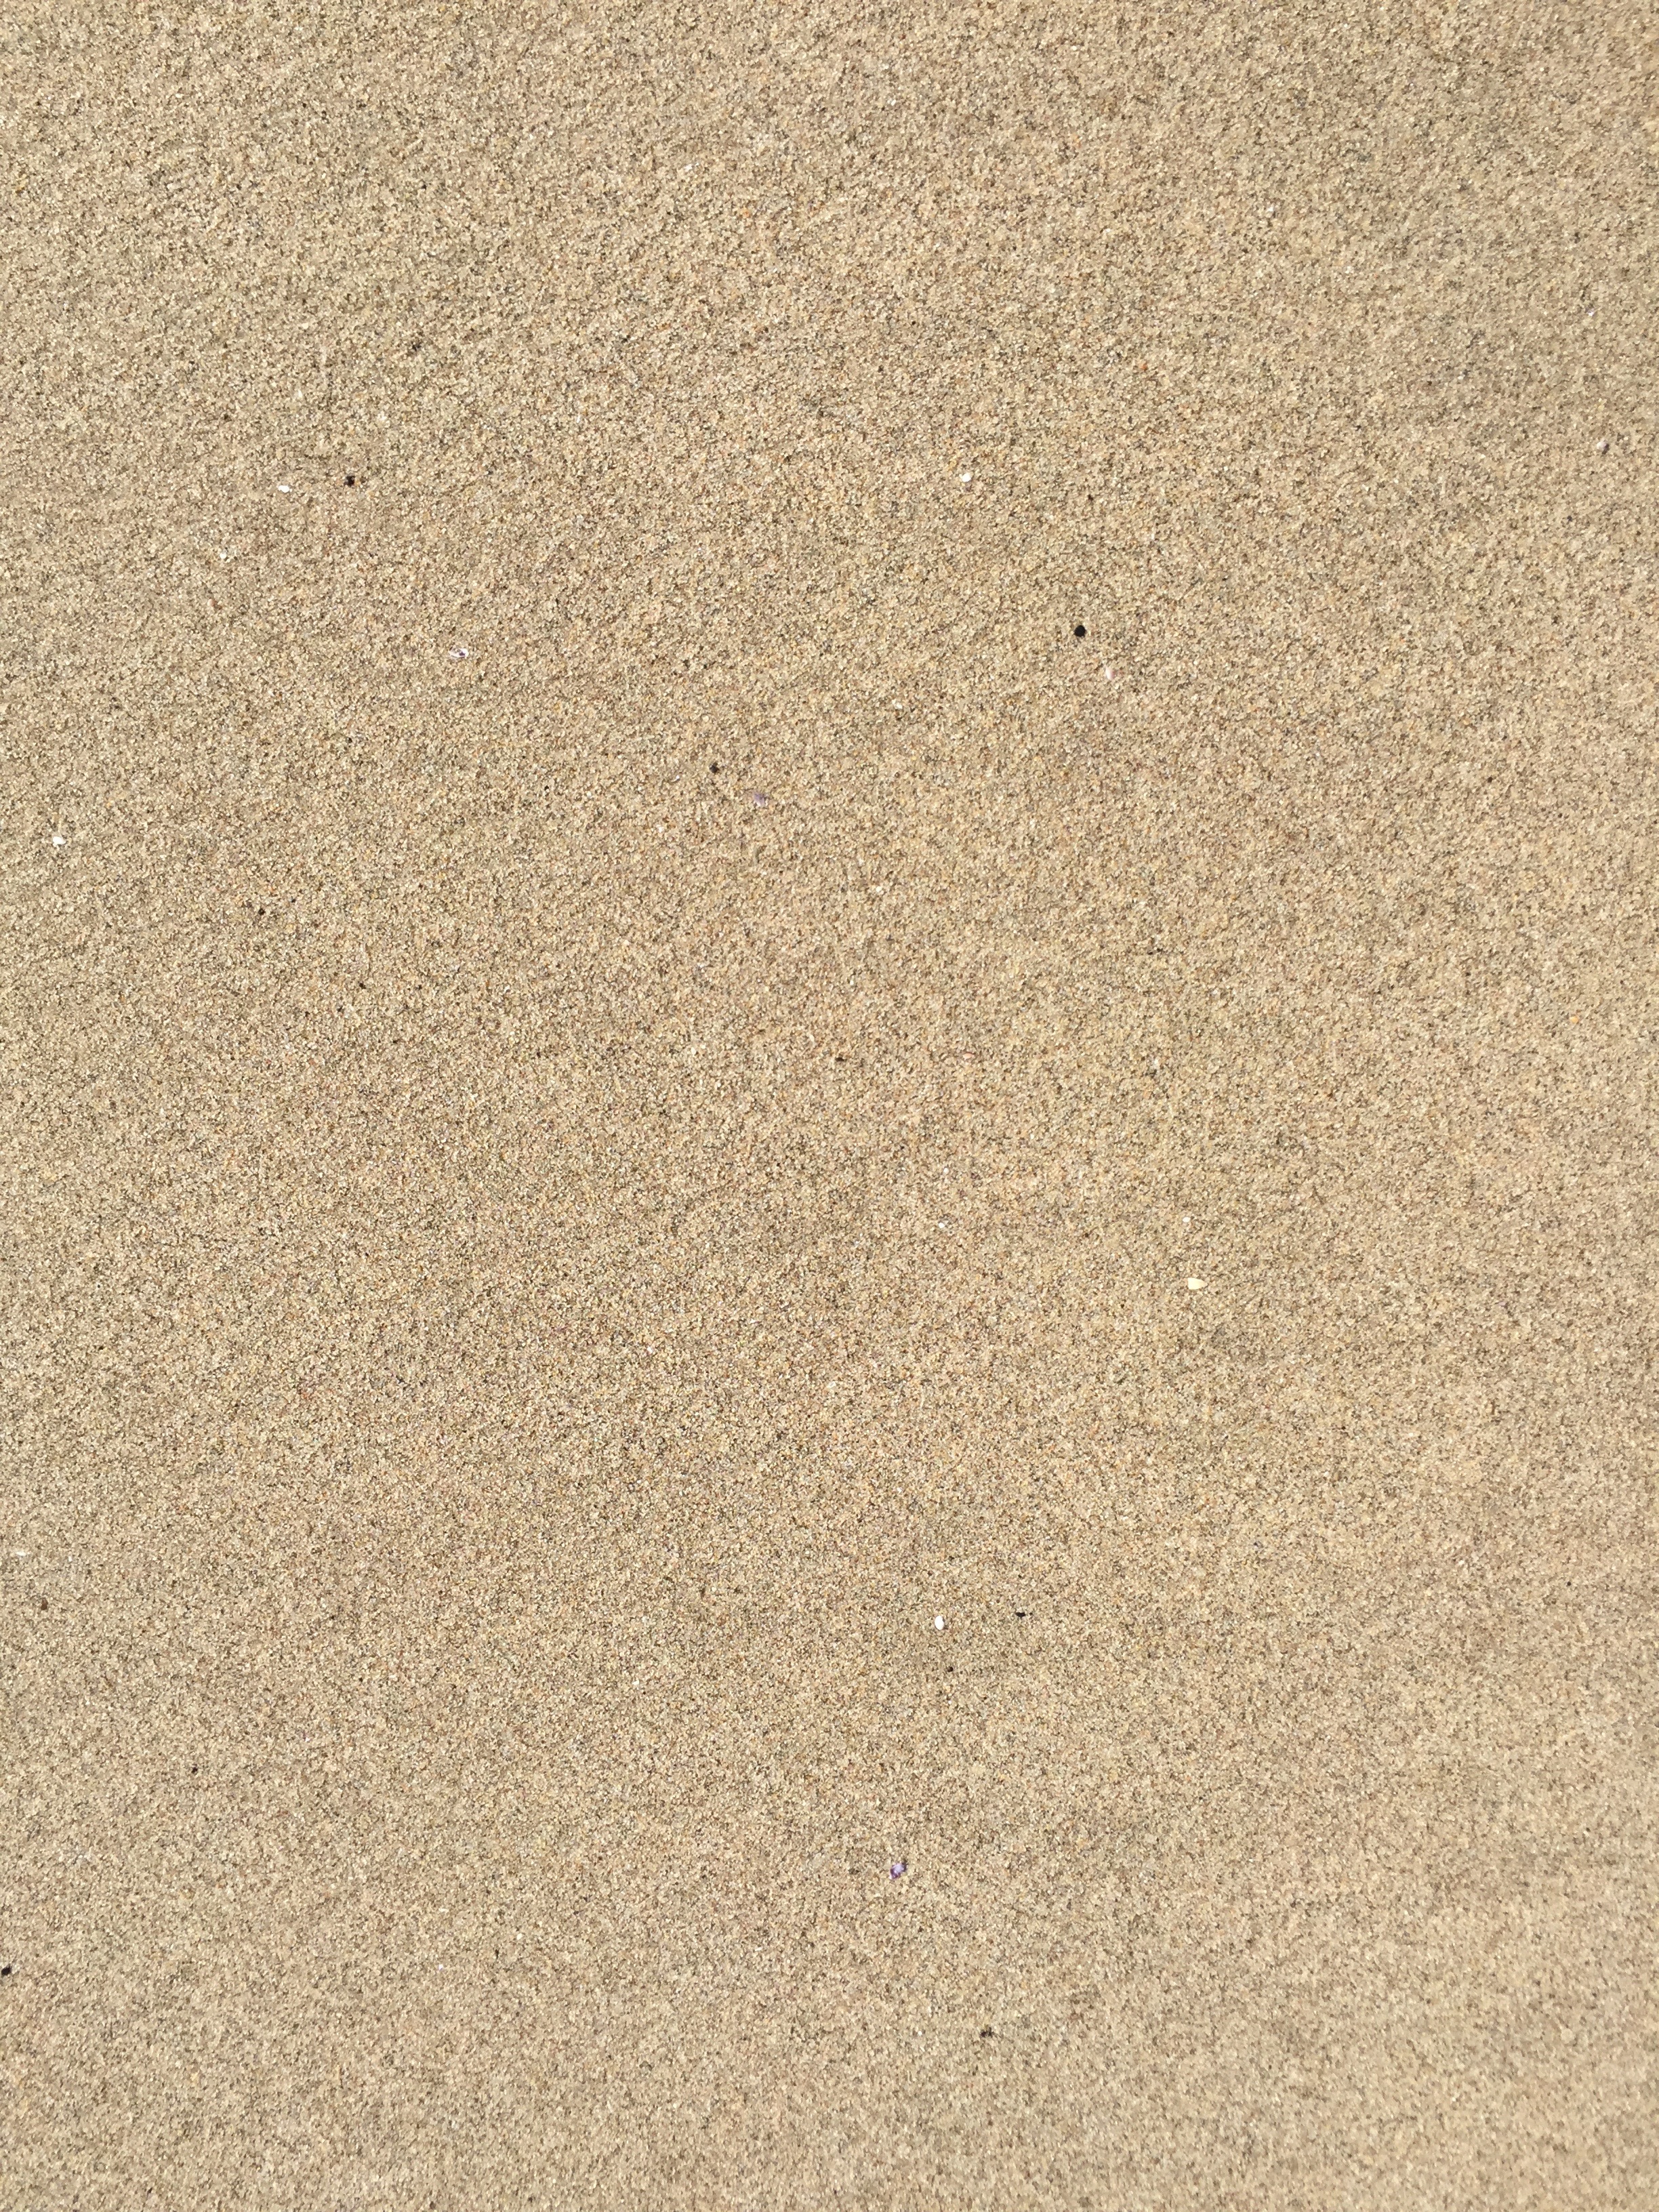 Sand Texture Map